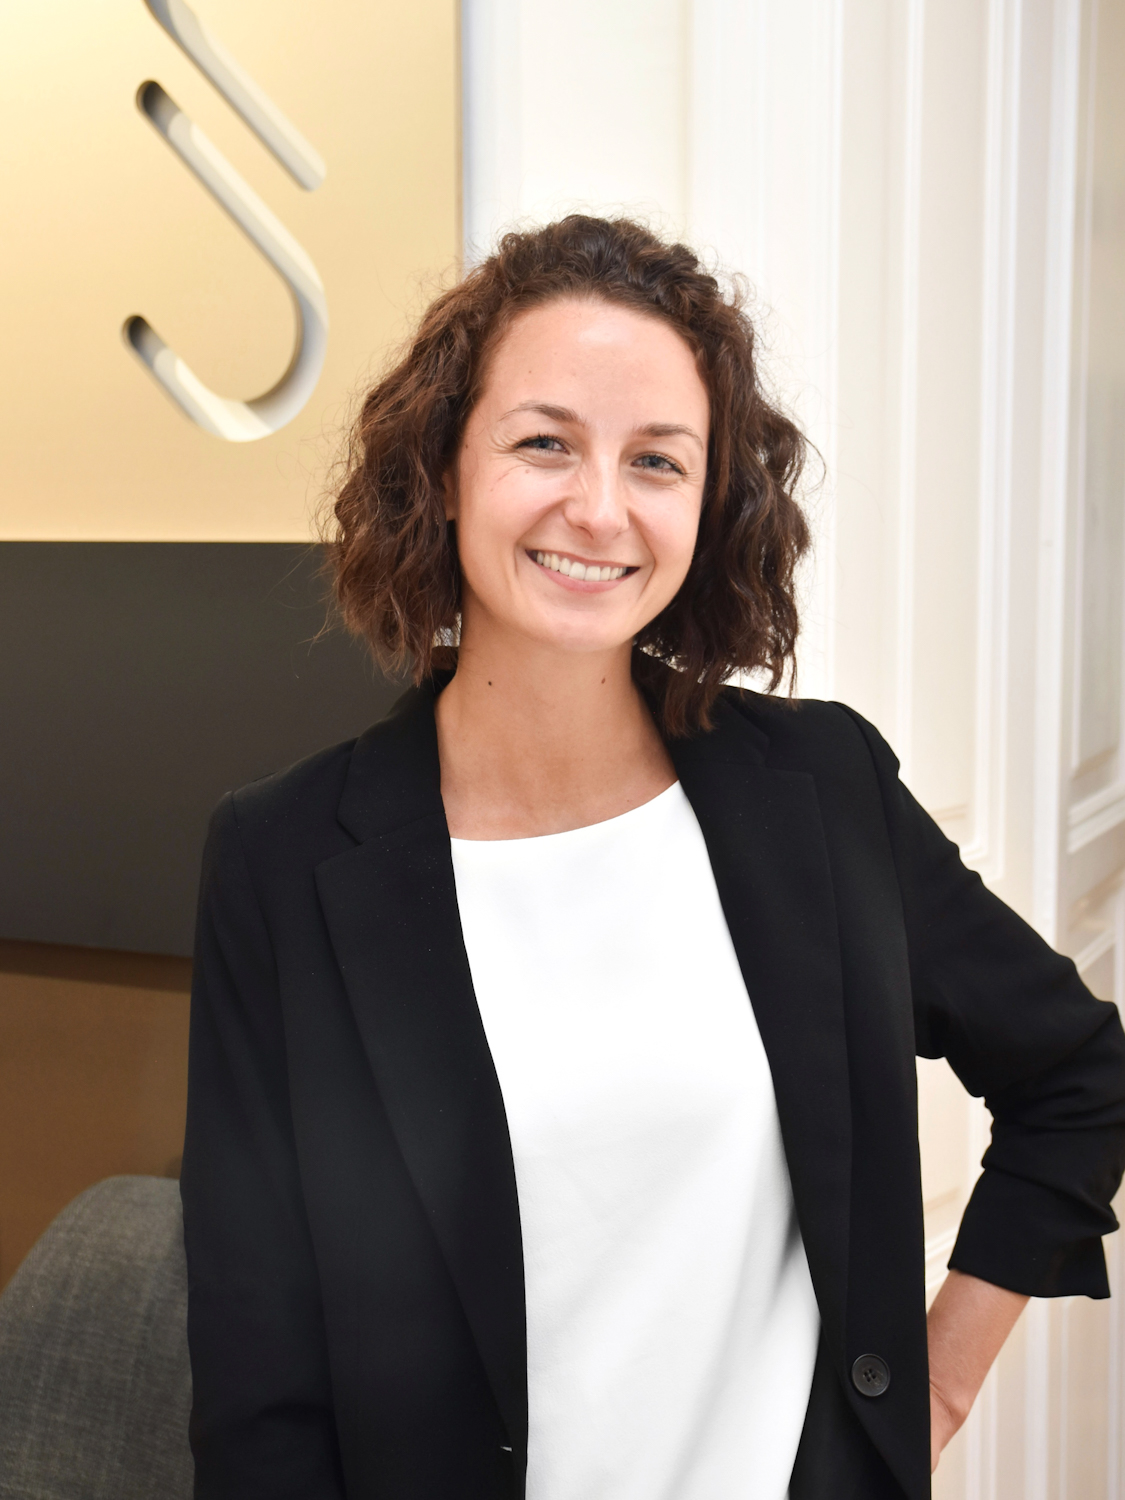 Mag. Romana Stromberger, Rechtsanwaltsanwärterin bei Ulm Neger Partner Rechtsanwälte GmbH